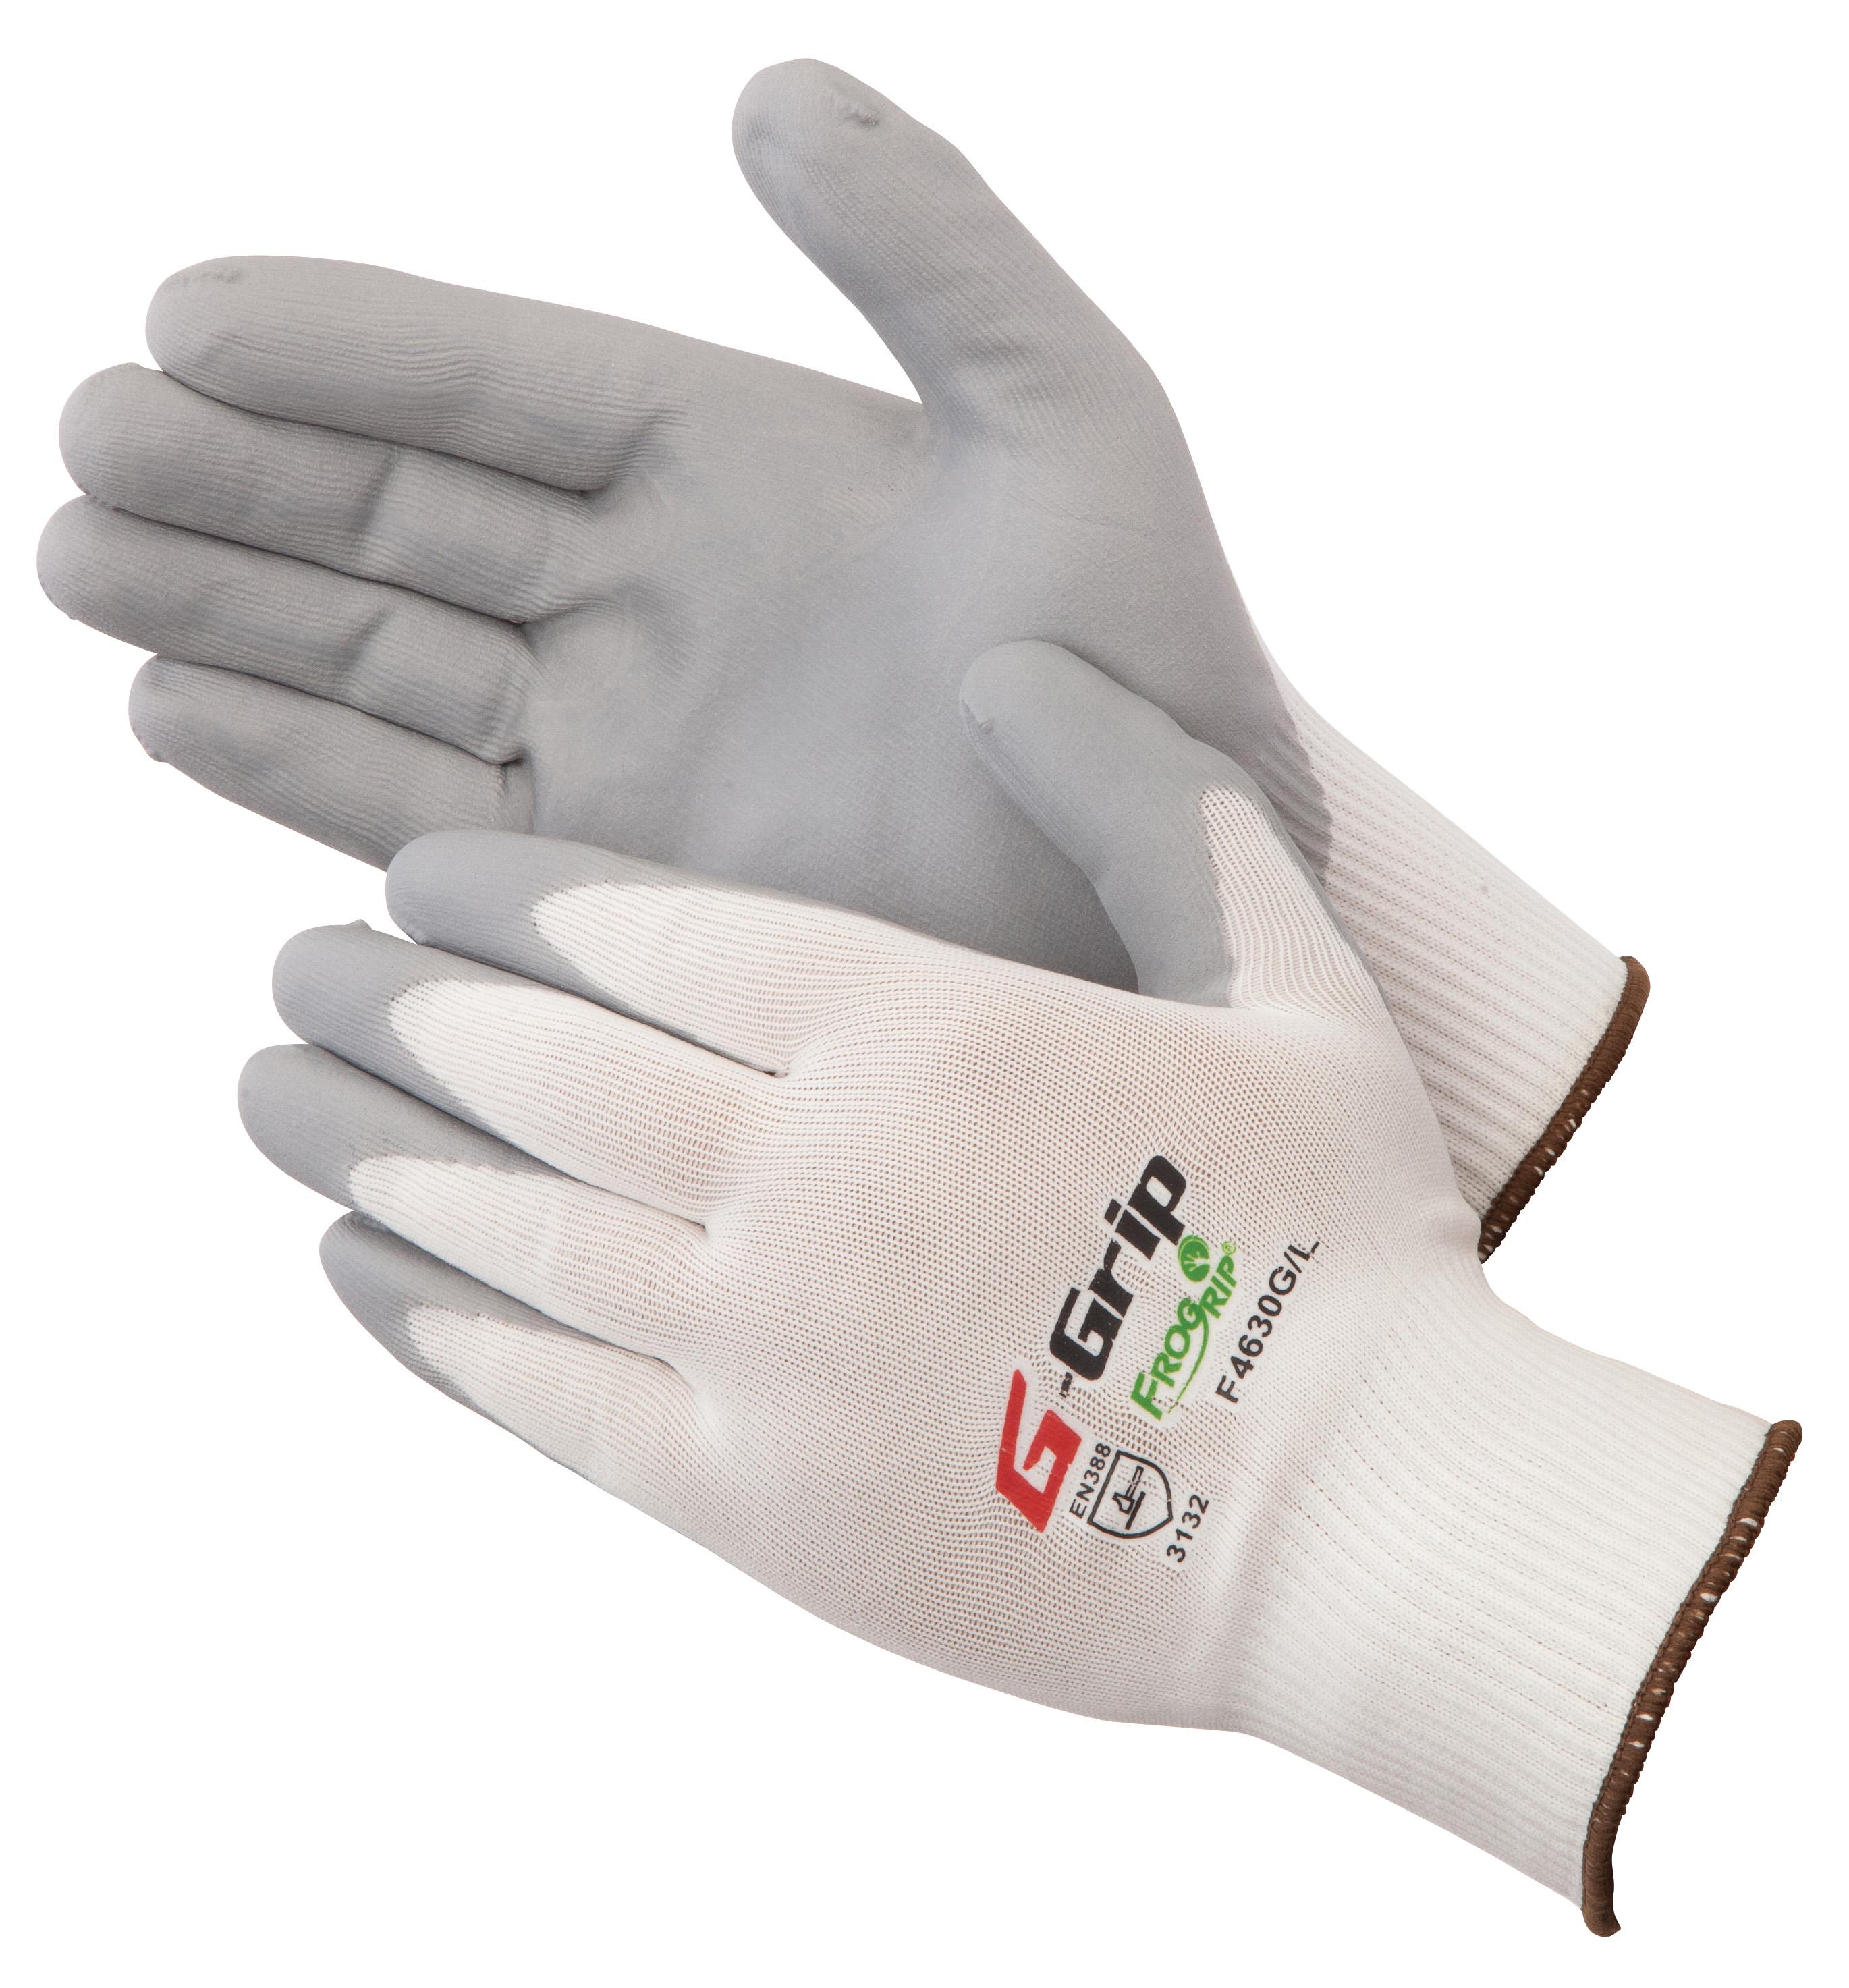 G-GRIP NITRILE FOAM PALM COATED - Nitrile Coated Gloves